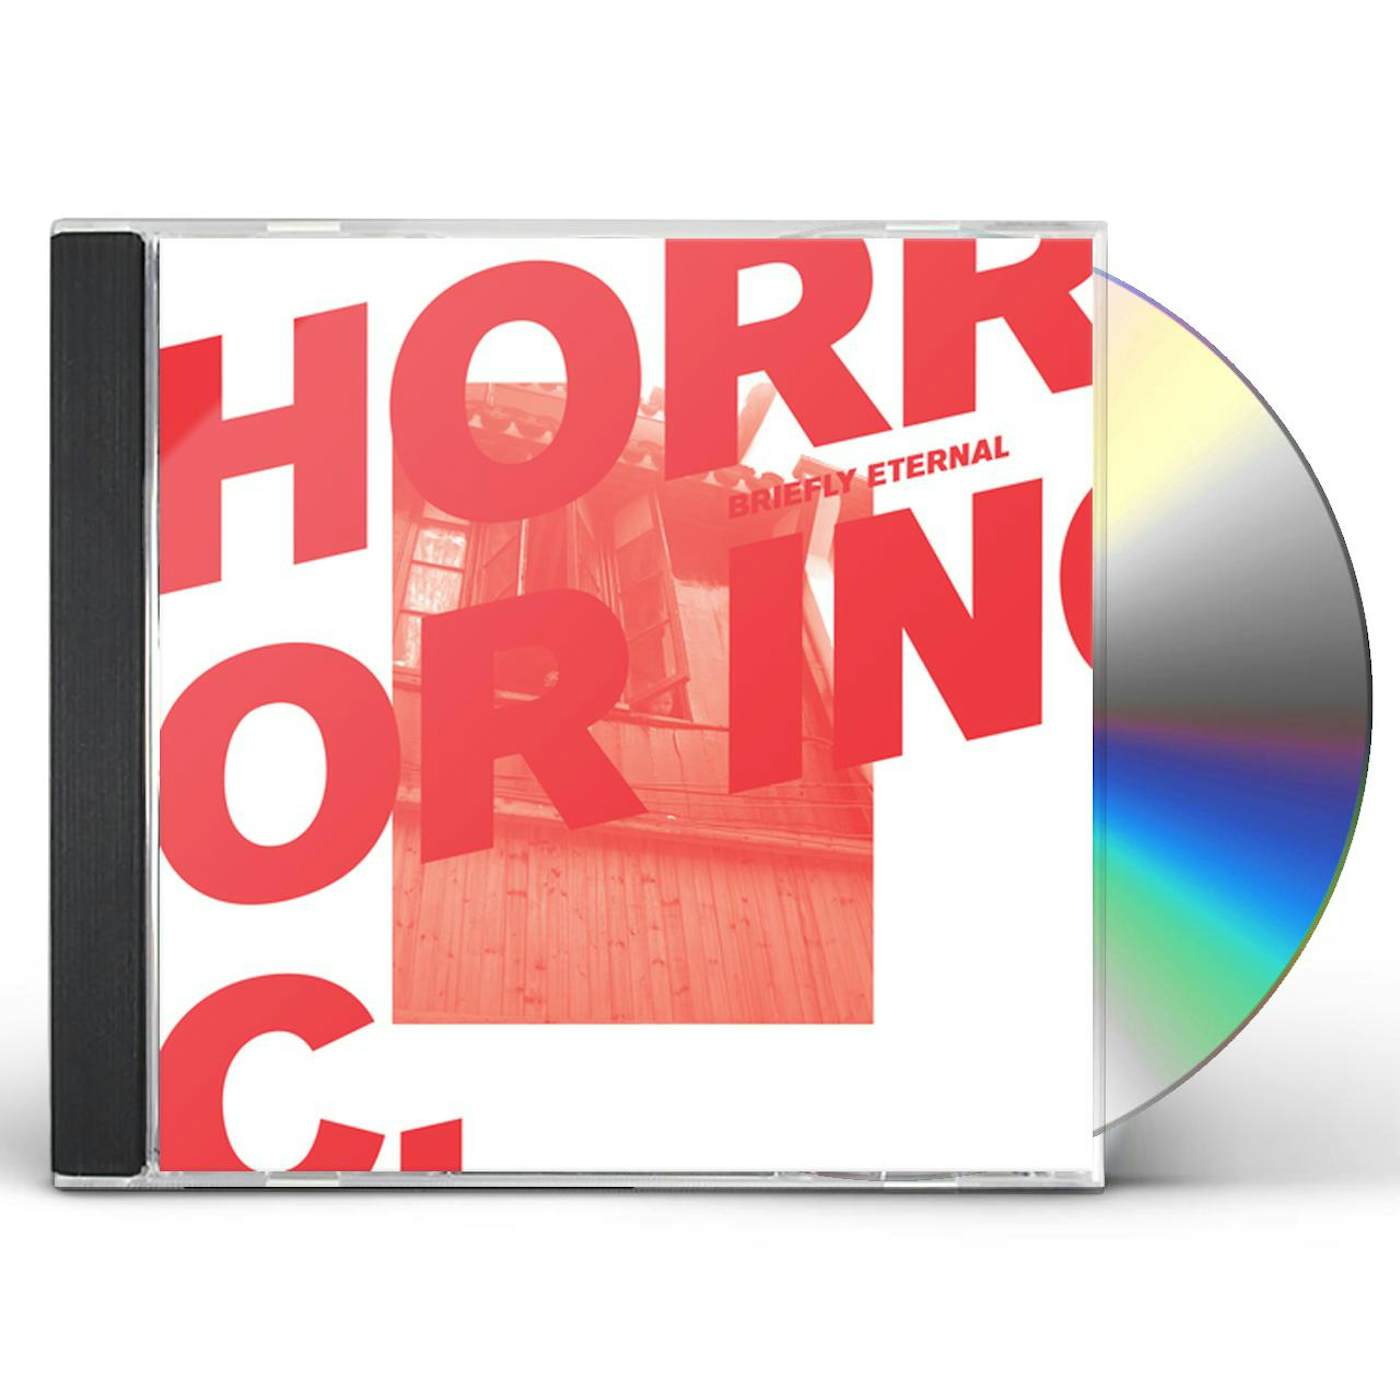 Horror inc. BRIEFLY ETERNAL CD